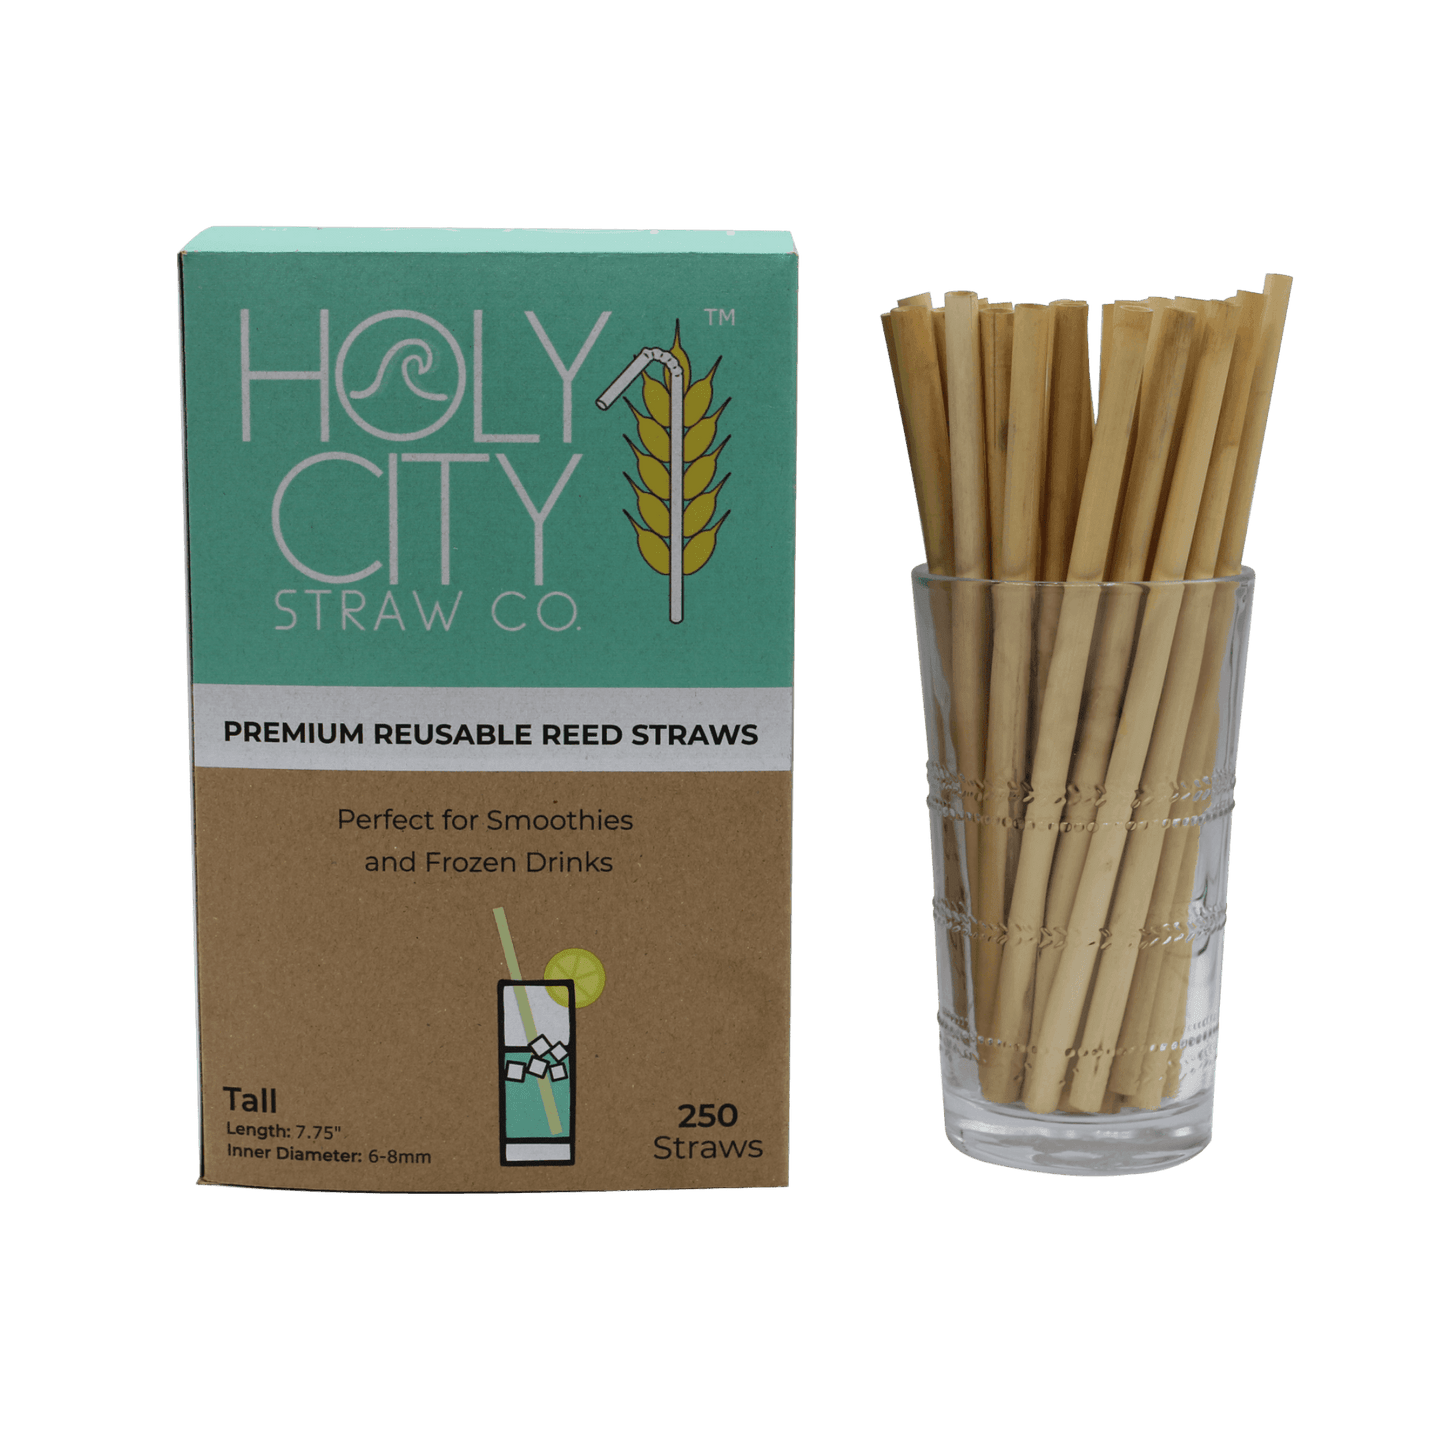 Holy City Straw Tall Reed Straws